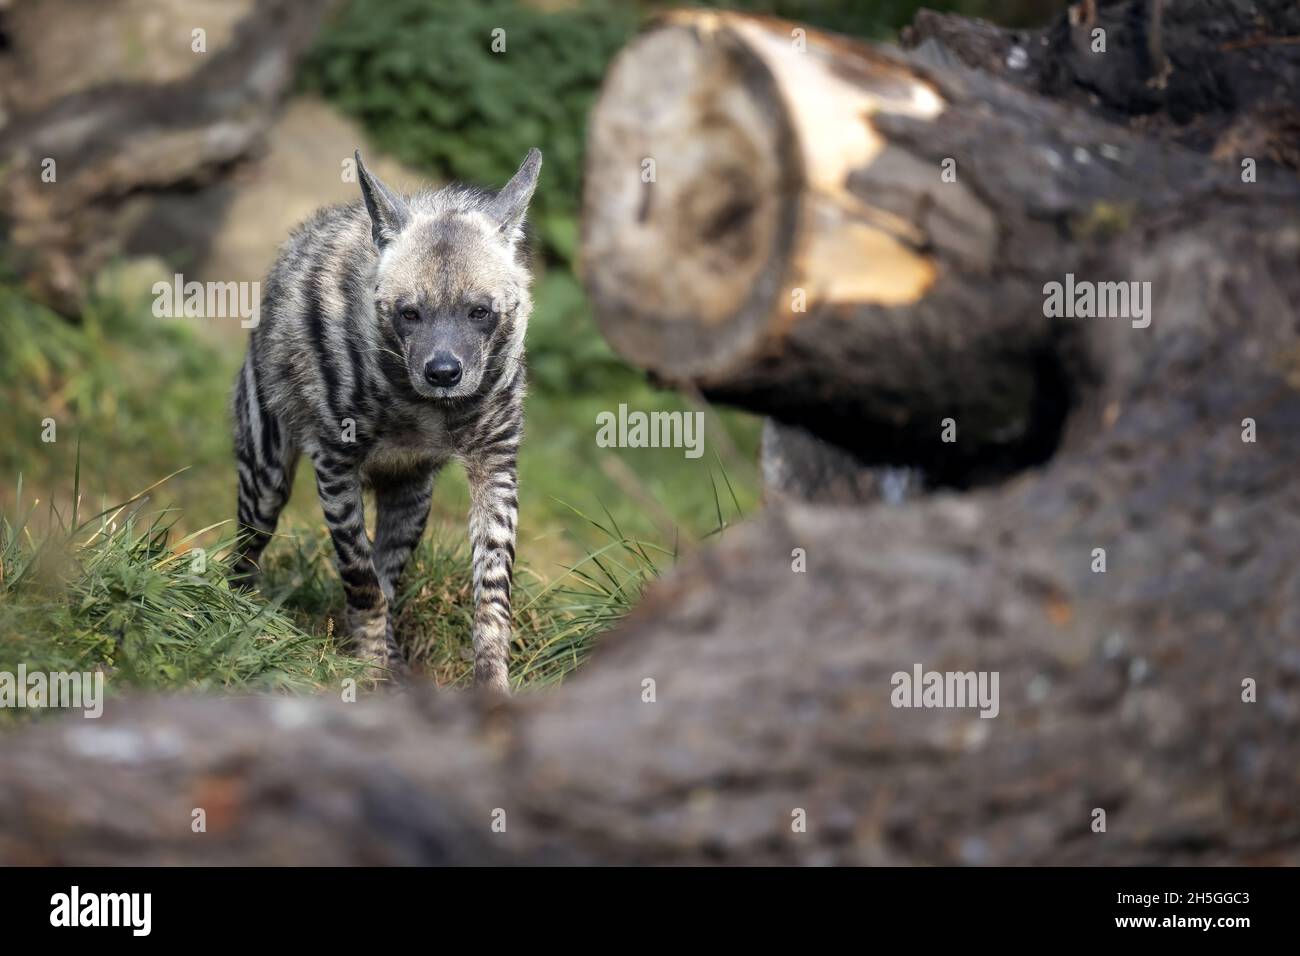 The hyena walks in its territory. Stock Photo